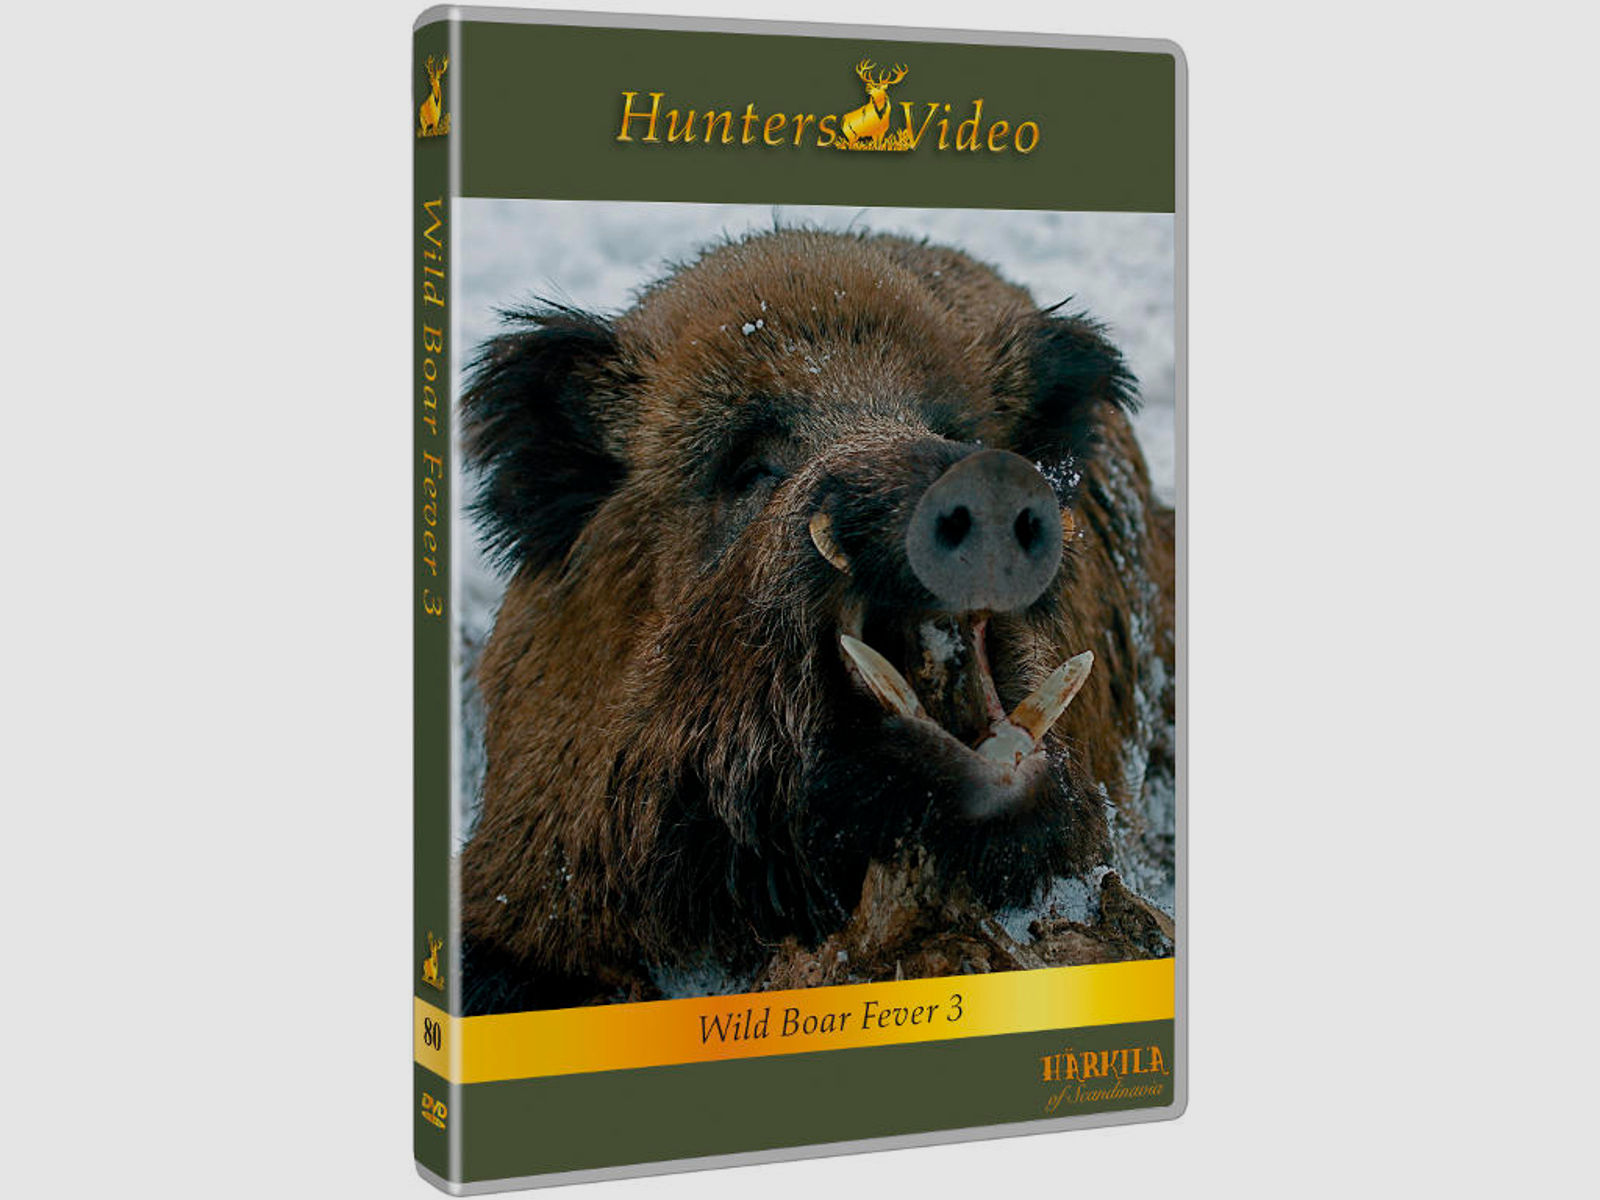 HuntersVideo Hunters Video - DVD Schwarzwildfieber 3